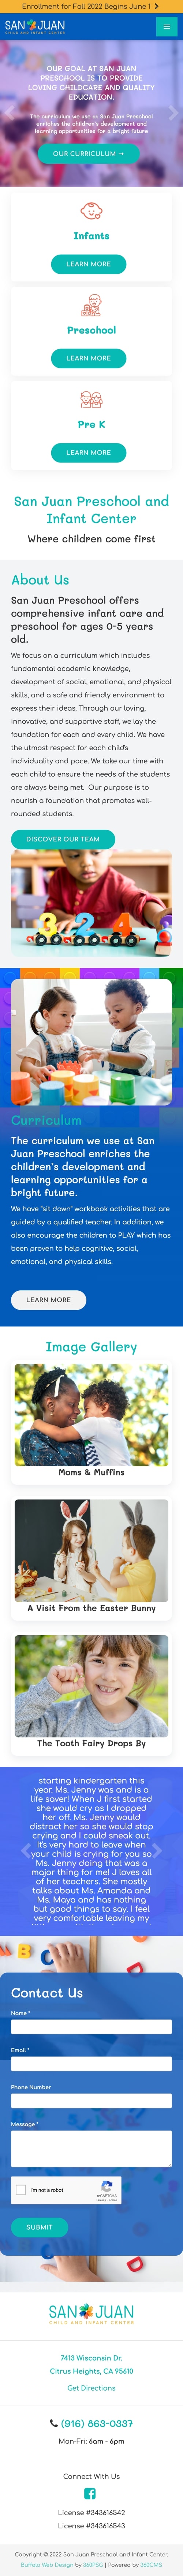 San Juan Preschool and Infant Center Website - Mobile